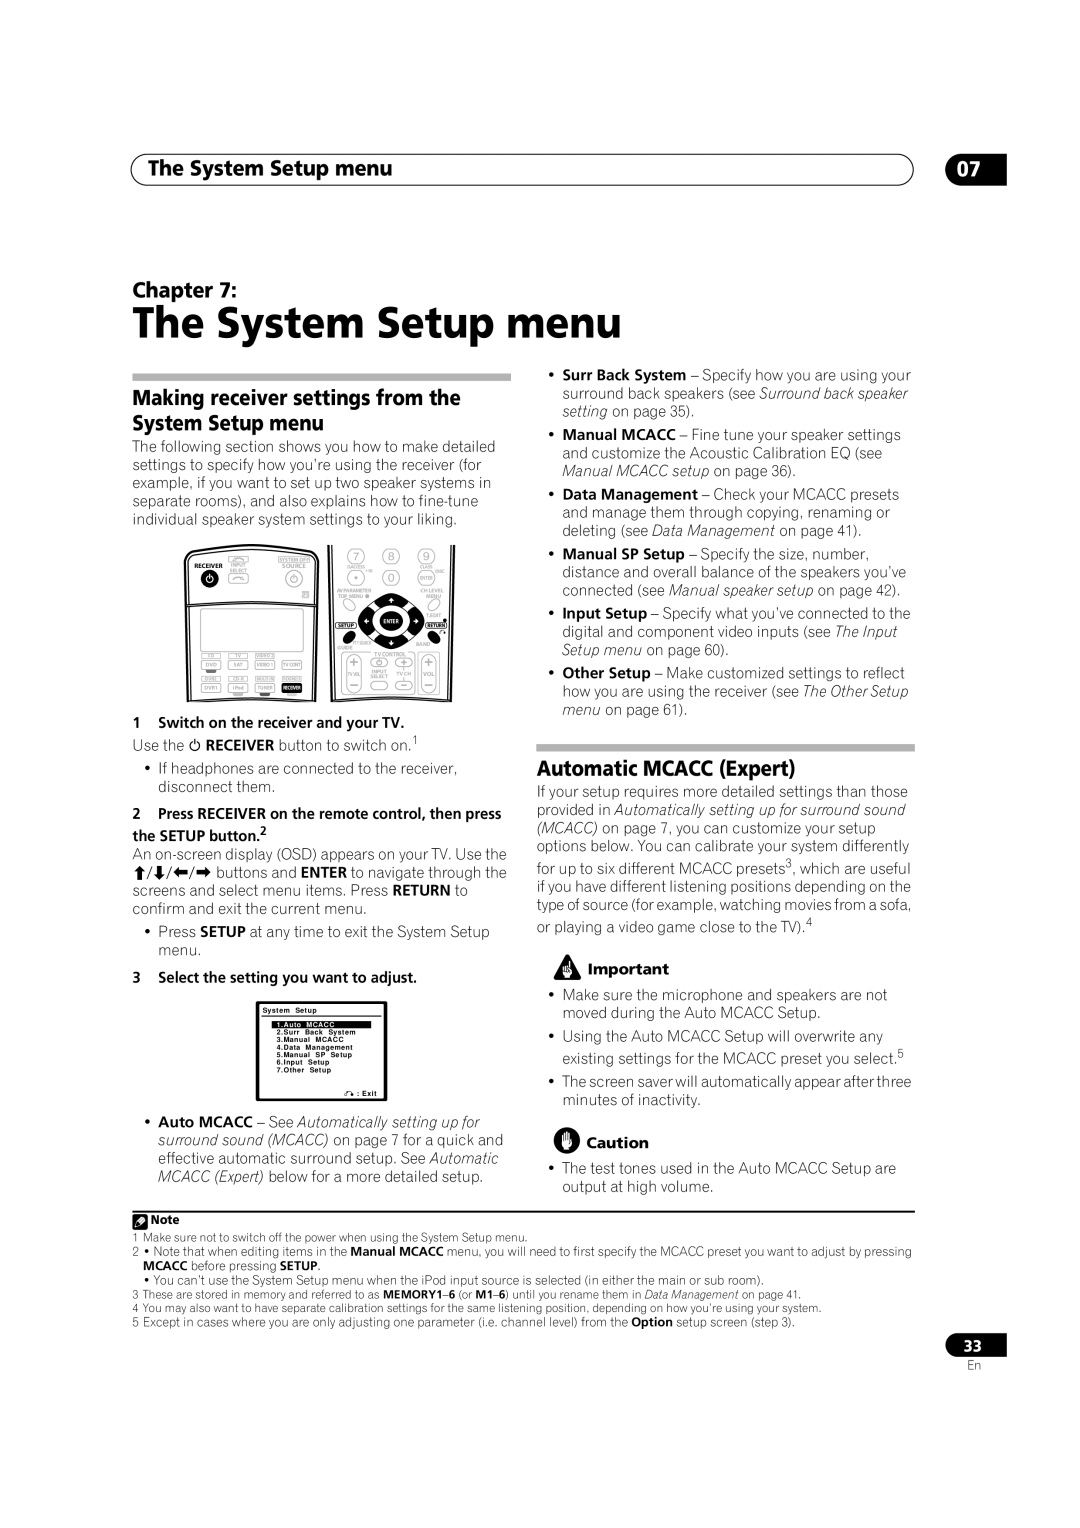 Pioneer VSX-AX4AVi-G, VSX-AX2AV-G manual The System Setup menu, Automatic MCACC Expert, Chapter 